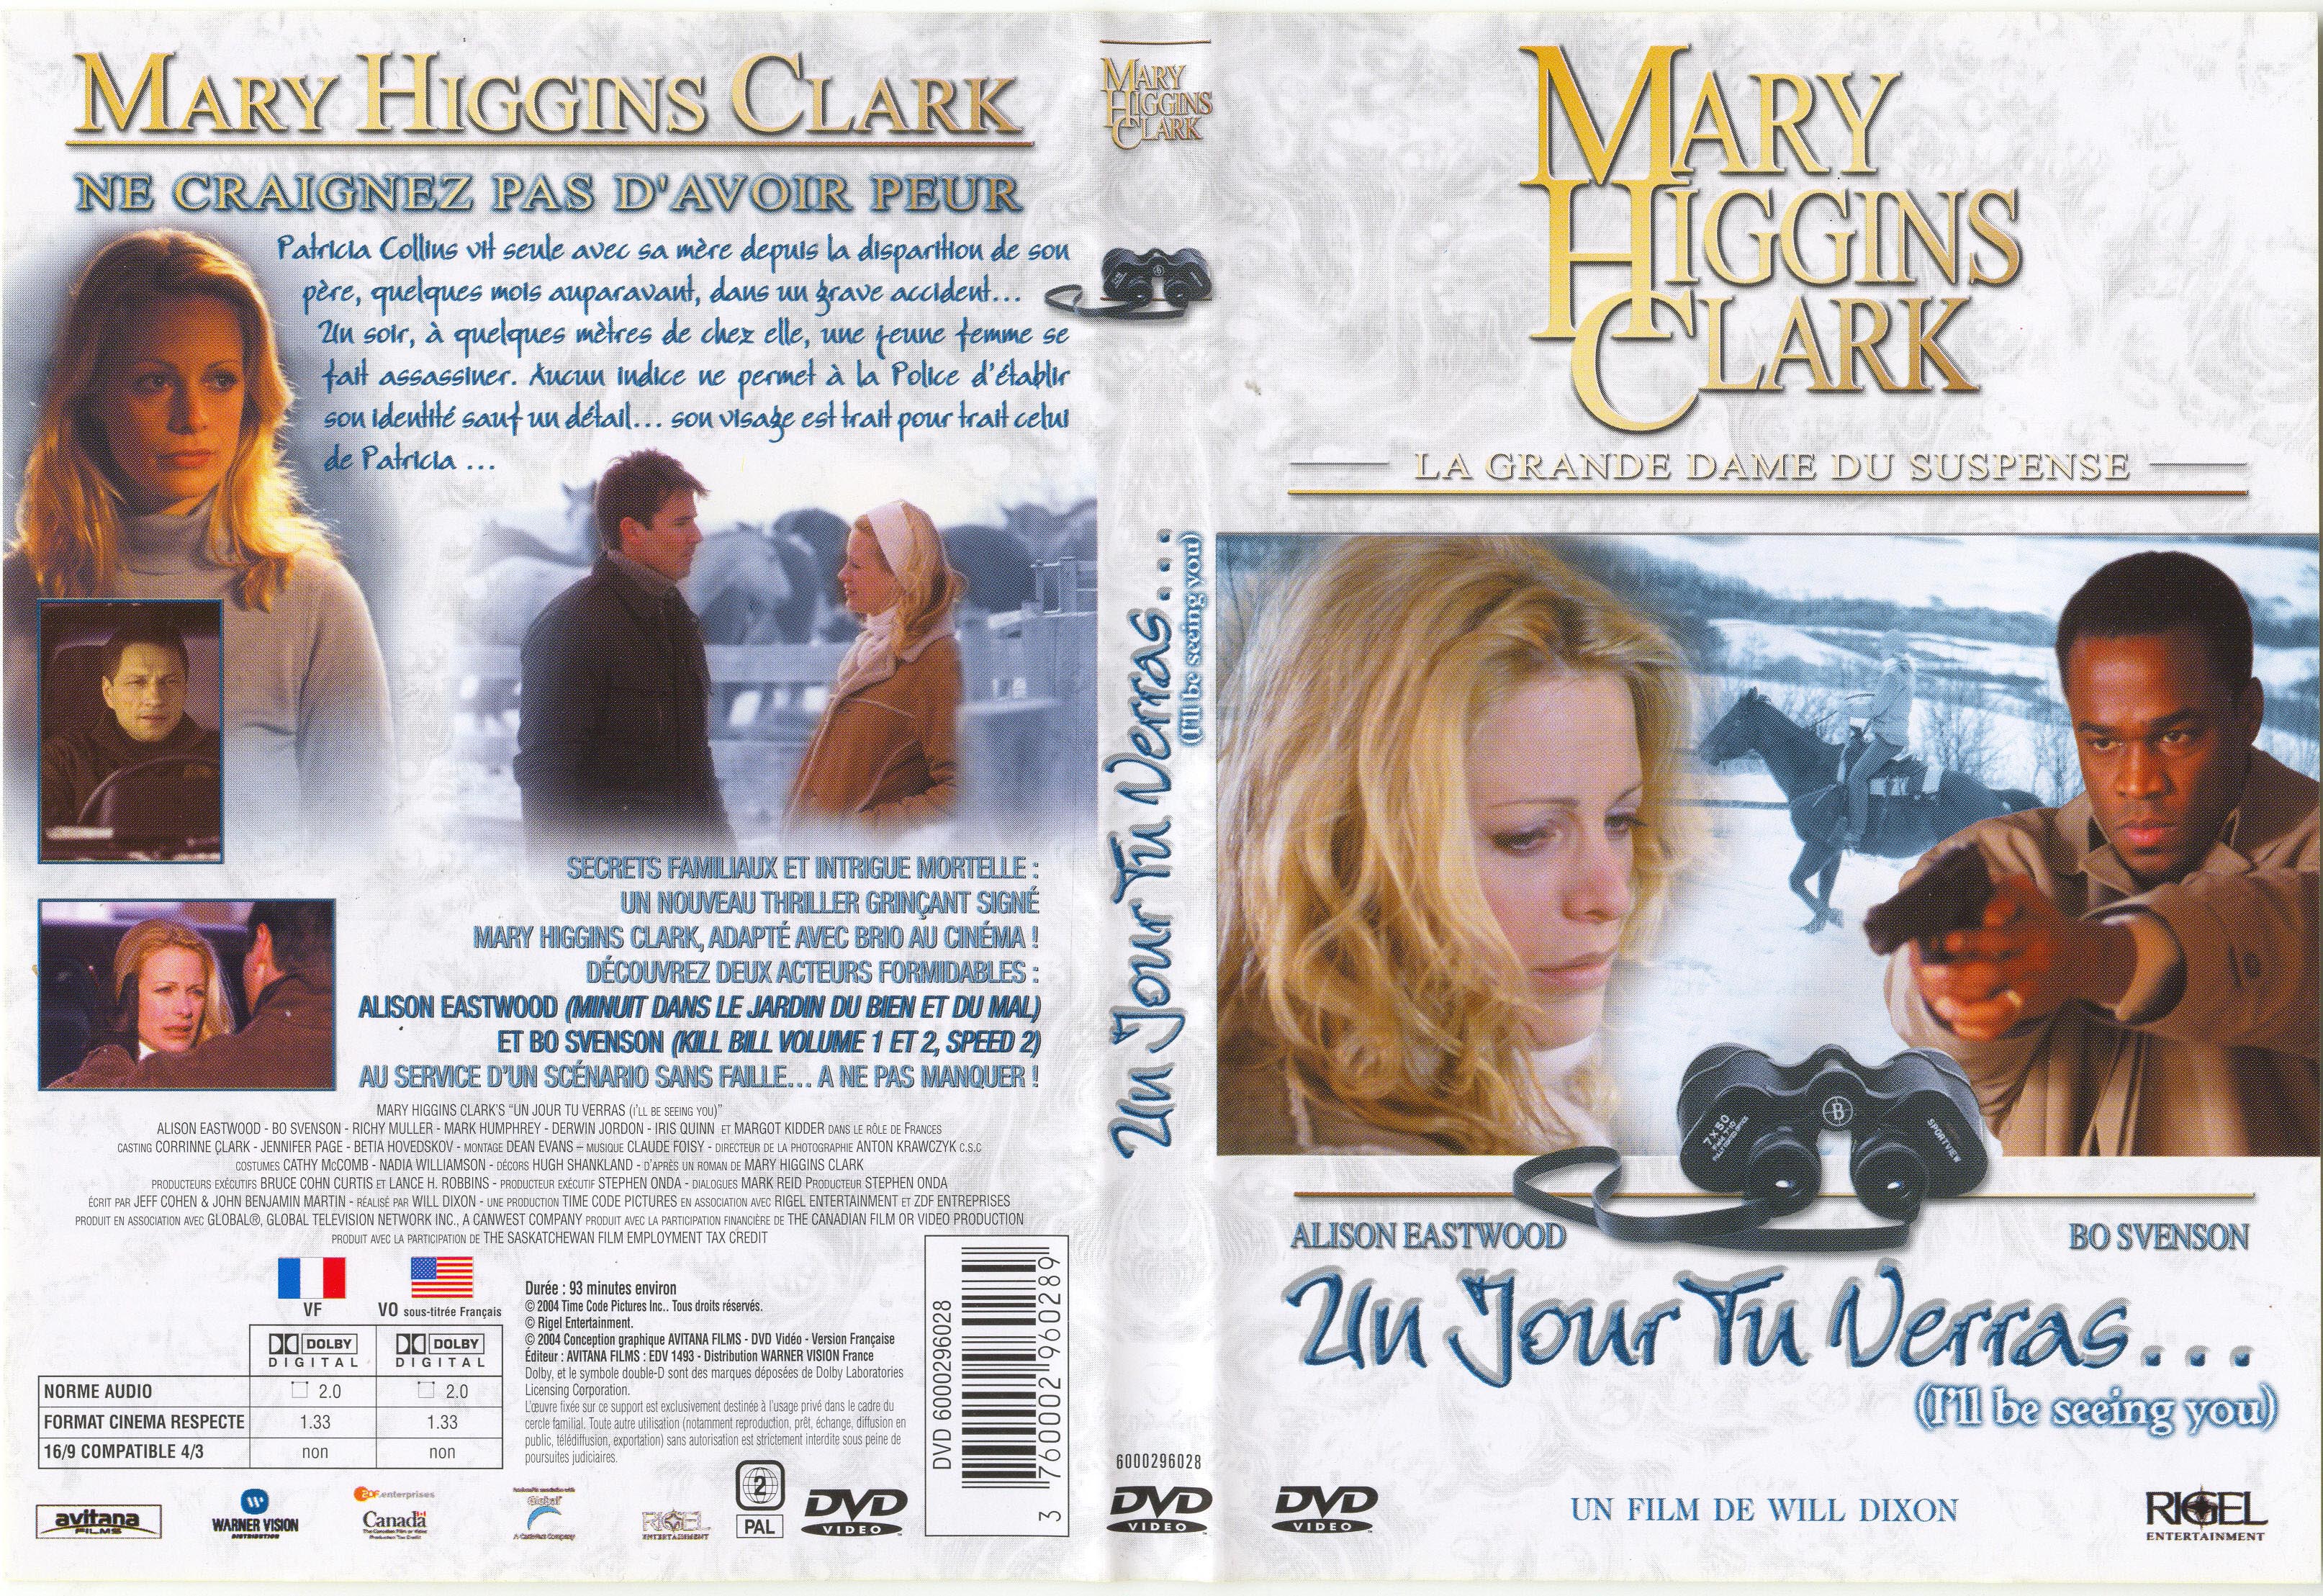 Jaquette DVD Mary Higgins Clark vol 14 - Un jour tu verras v2